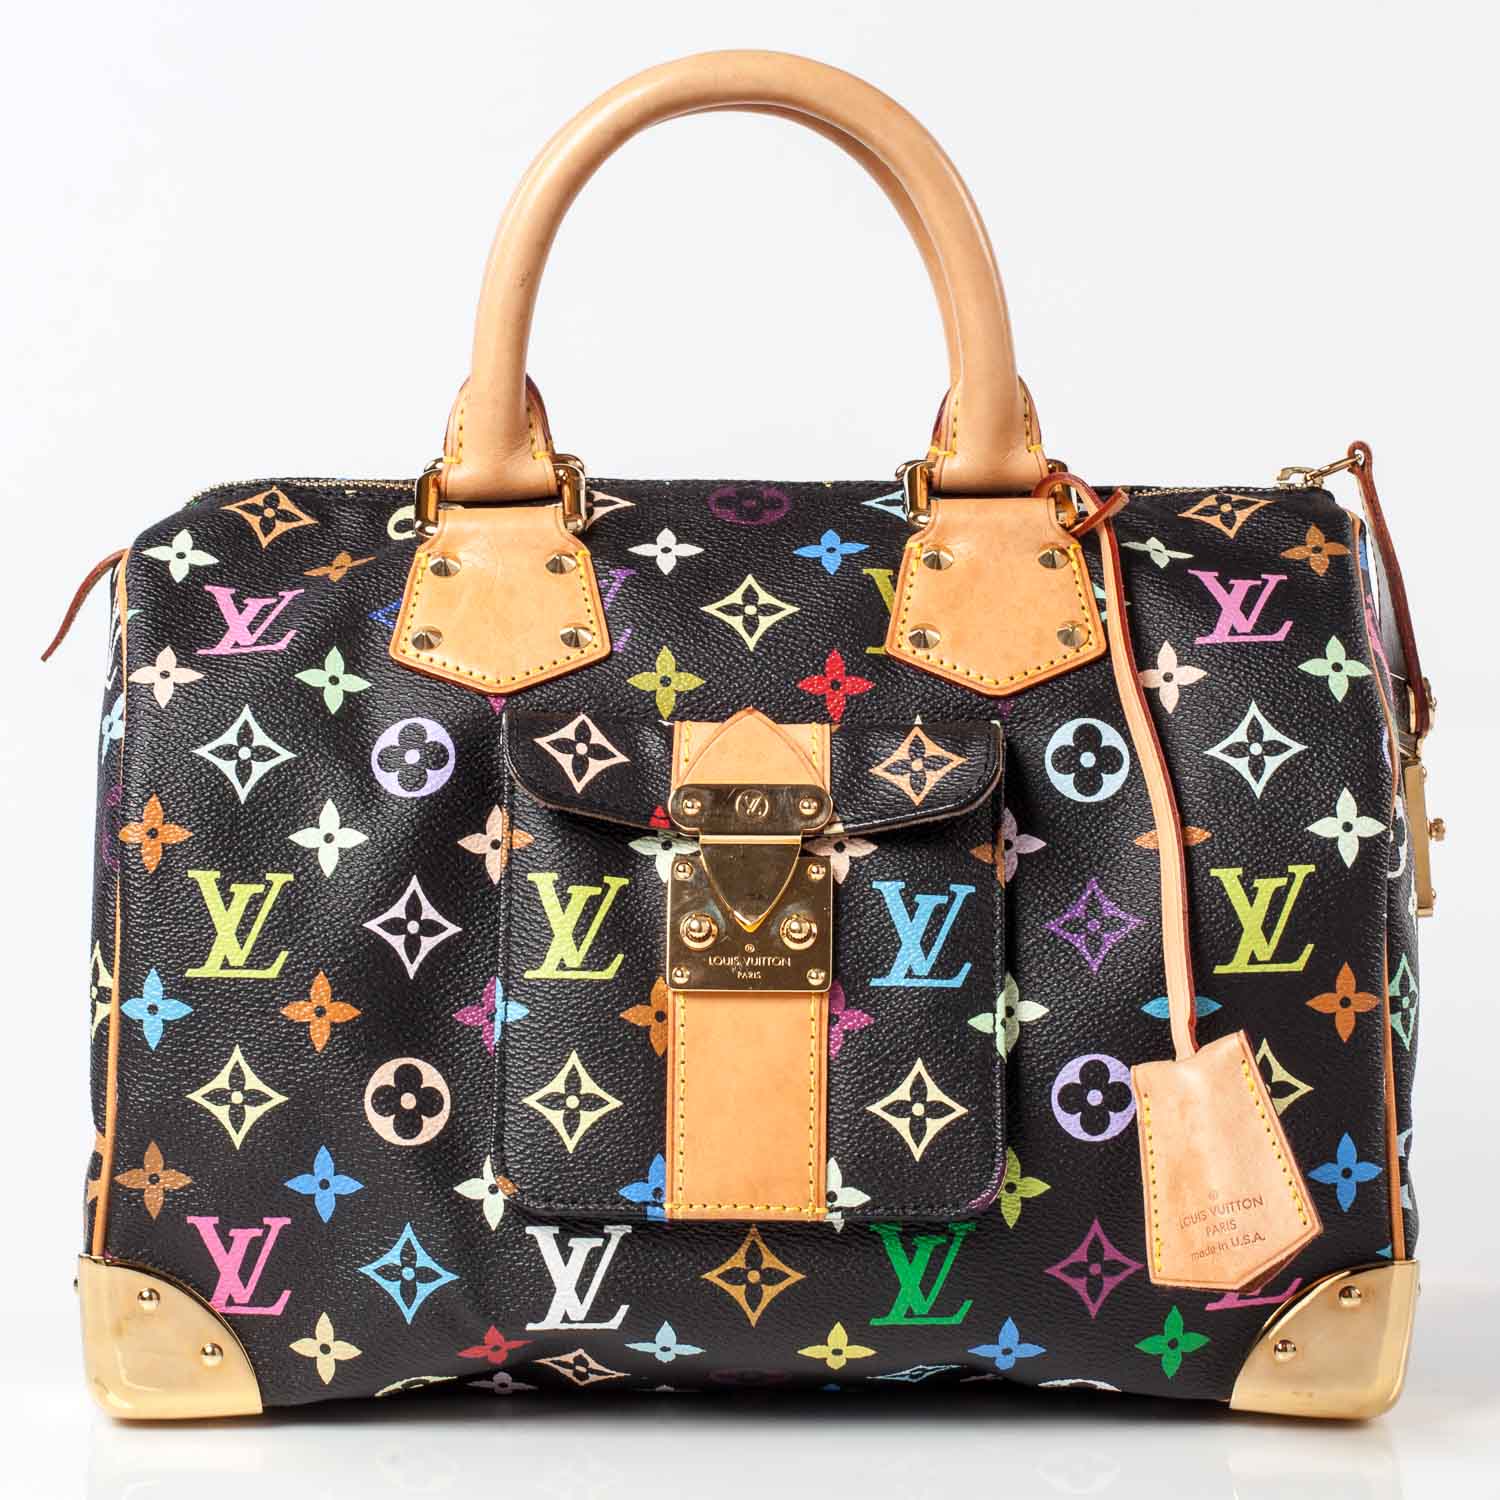 We Buy Louis Vuitton Bags Under | semashow.com